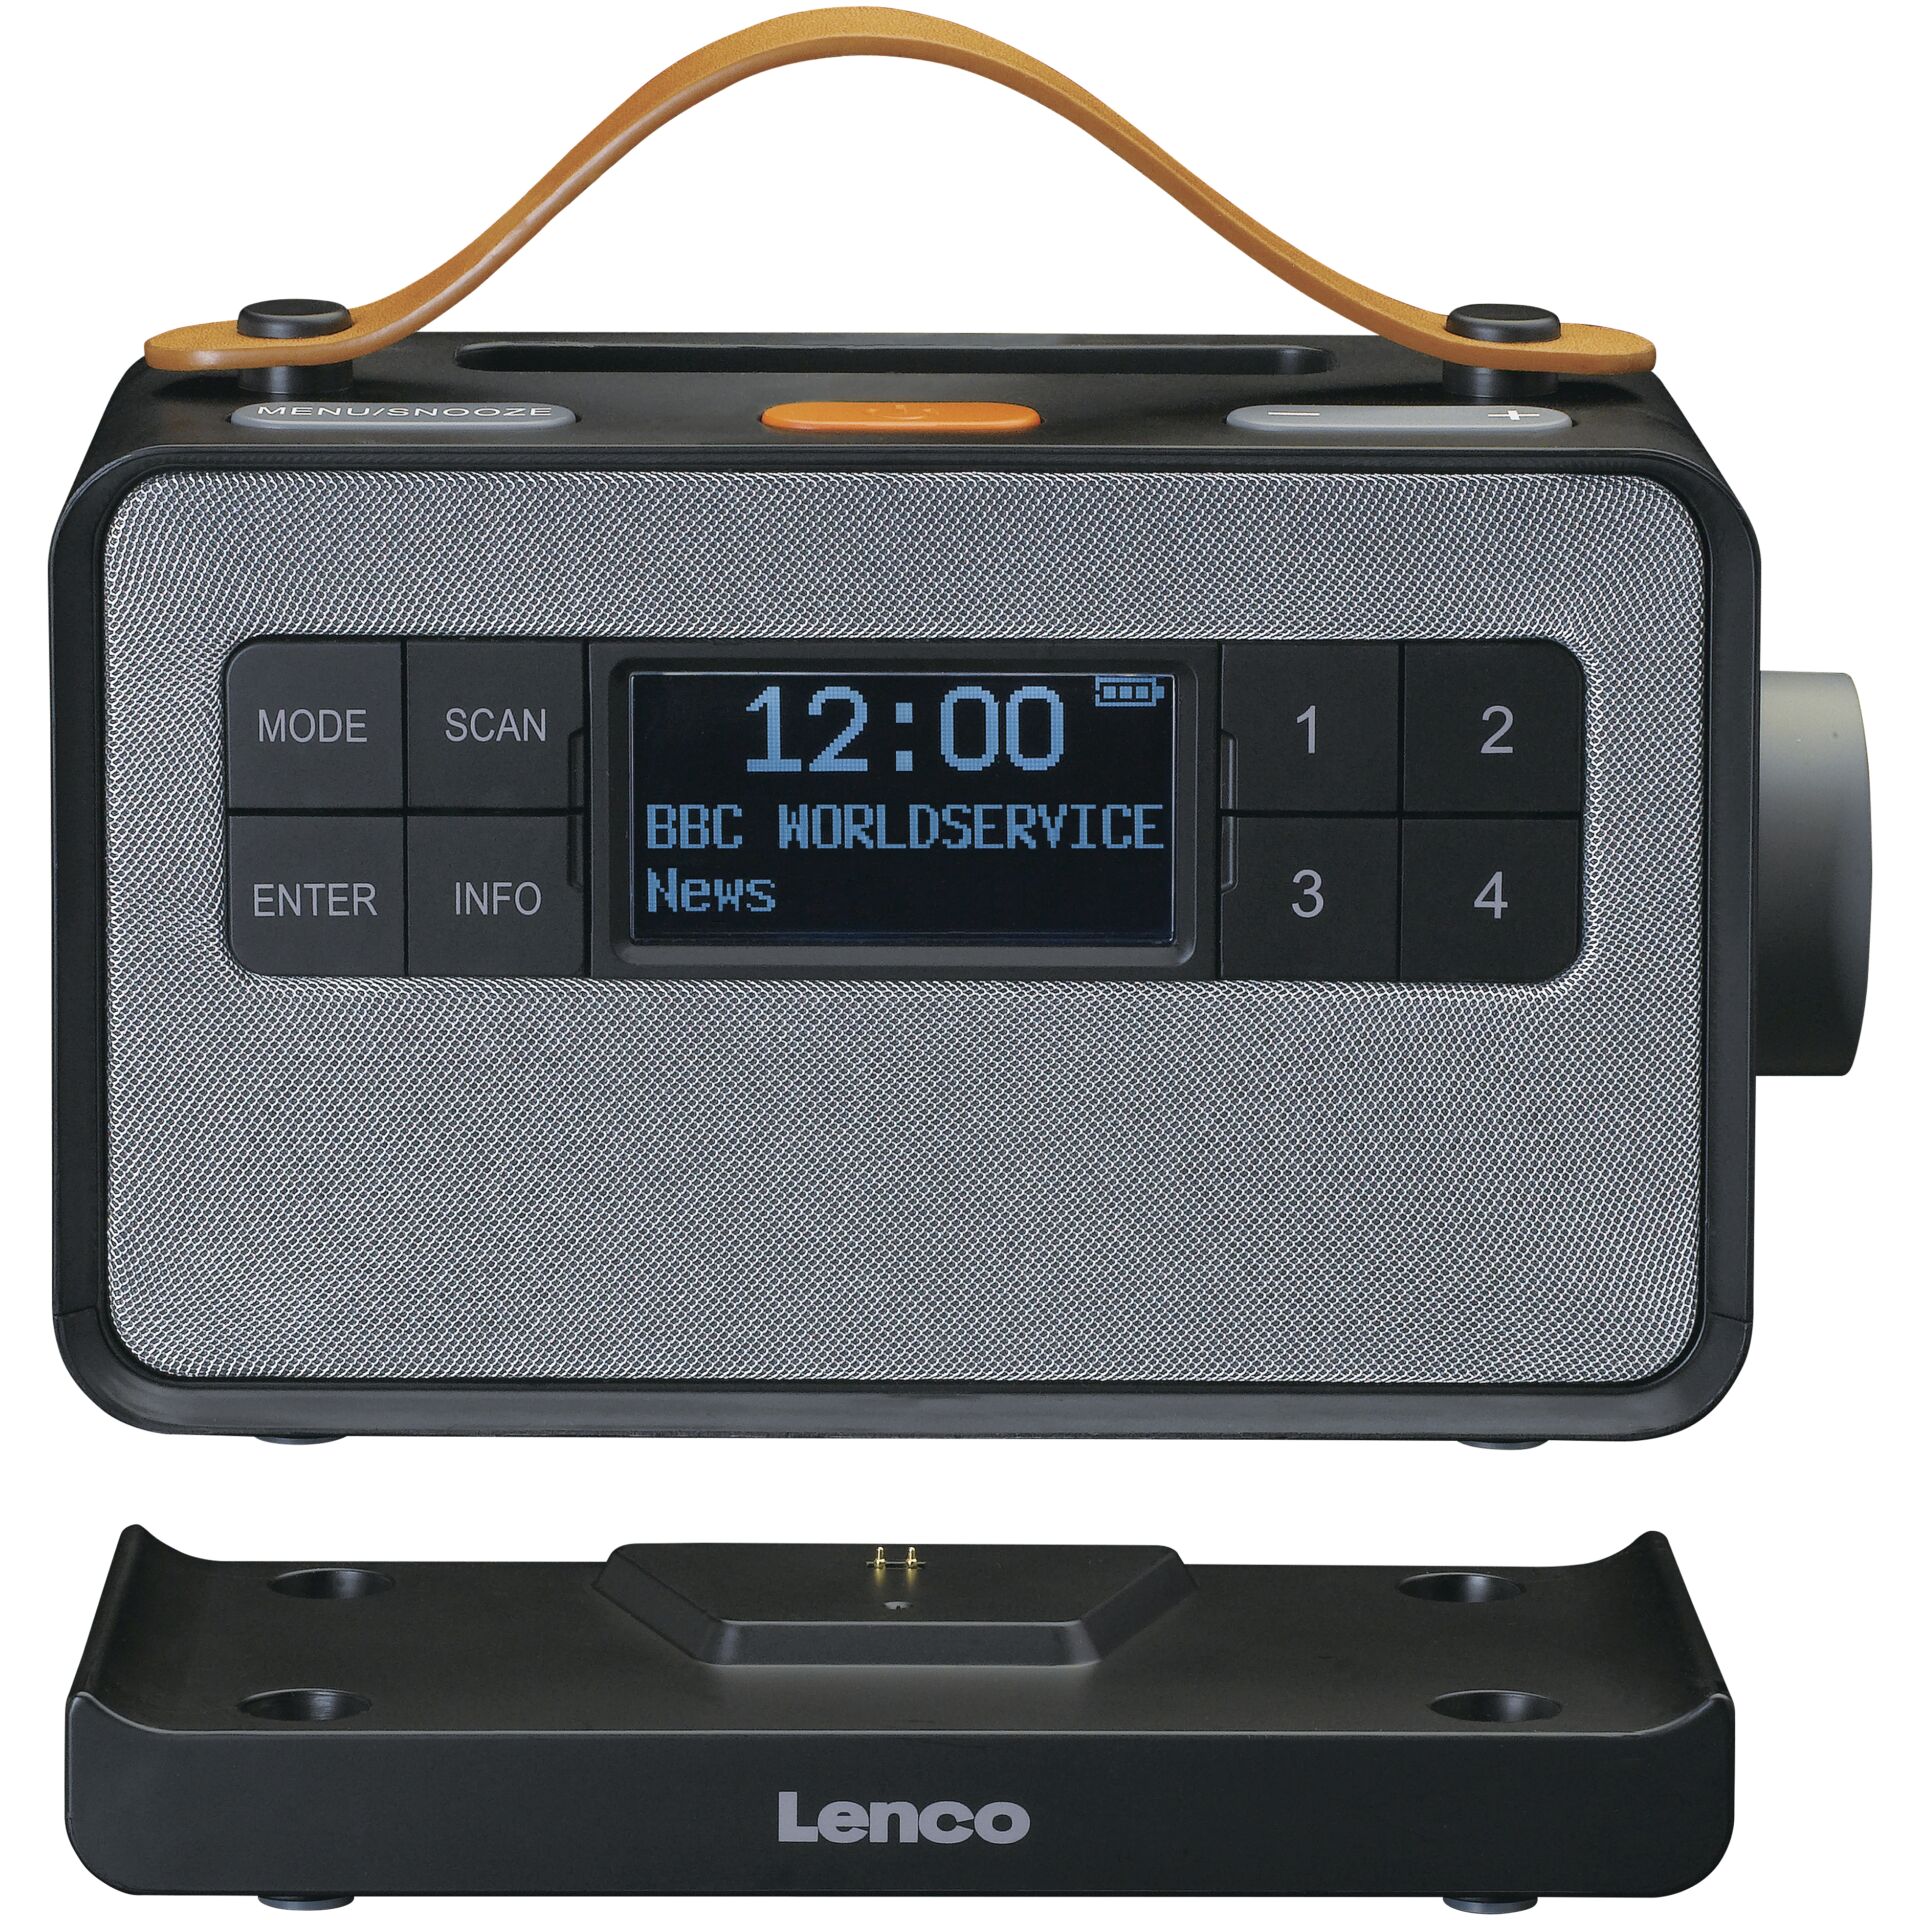 Lenco -PDR-065 schwarz (PDR-065BK) -Lenco Hardware/Electronic